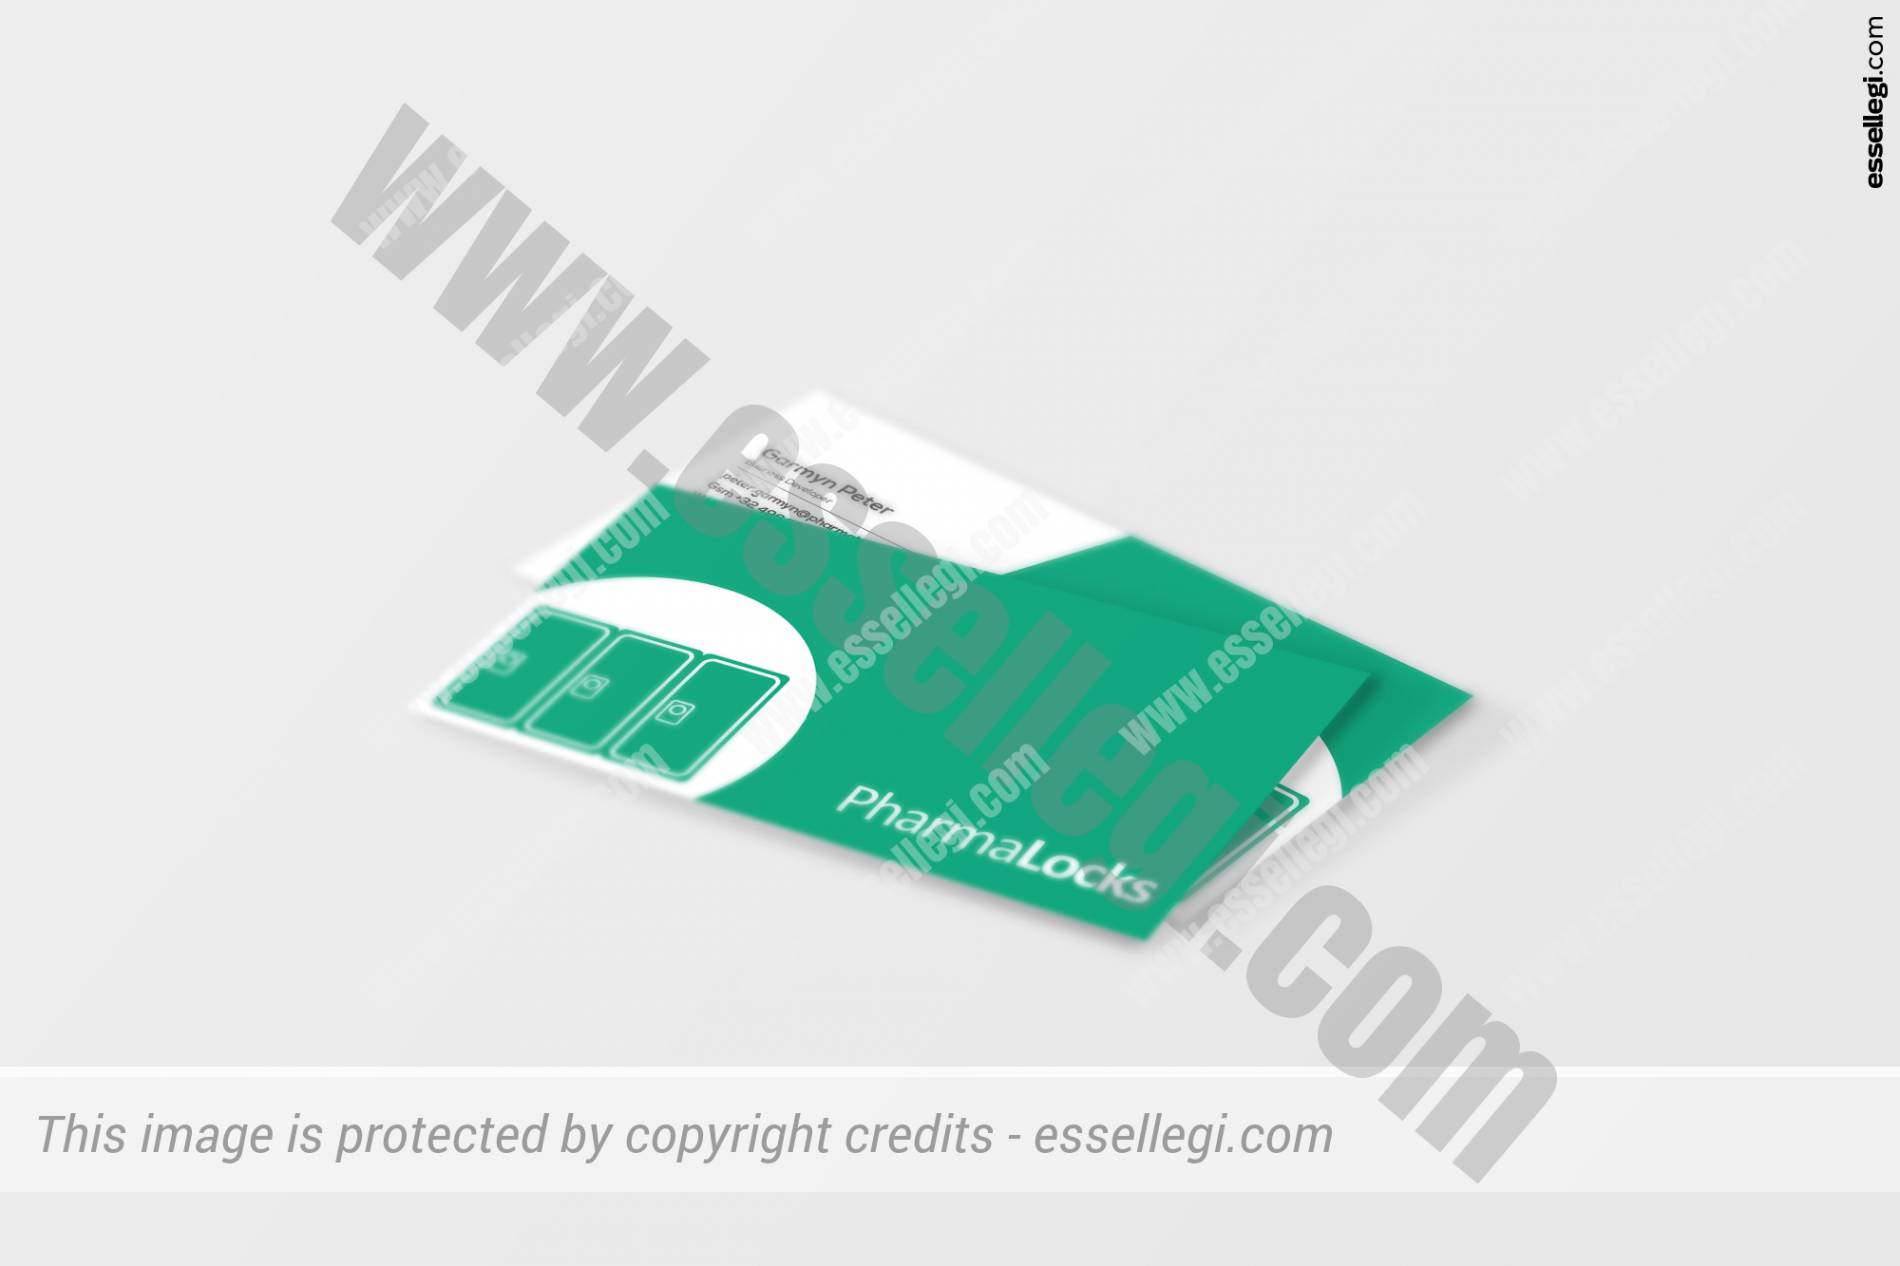 PharmaLocks Business Card Design by Essellegi Design